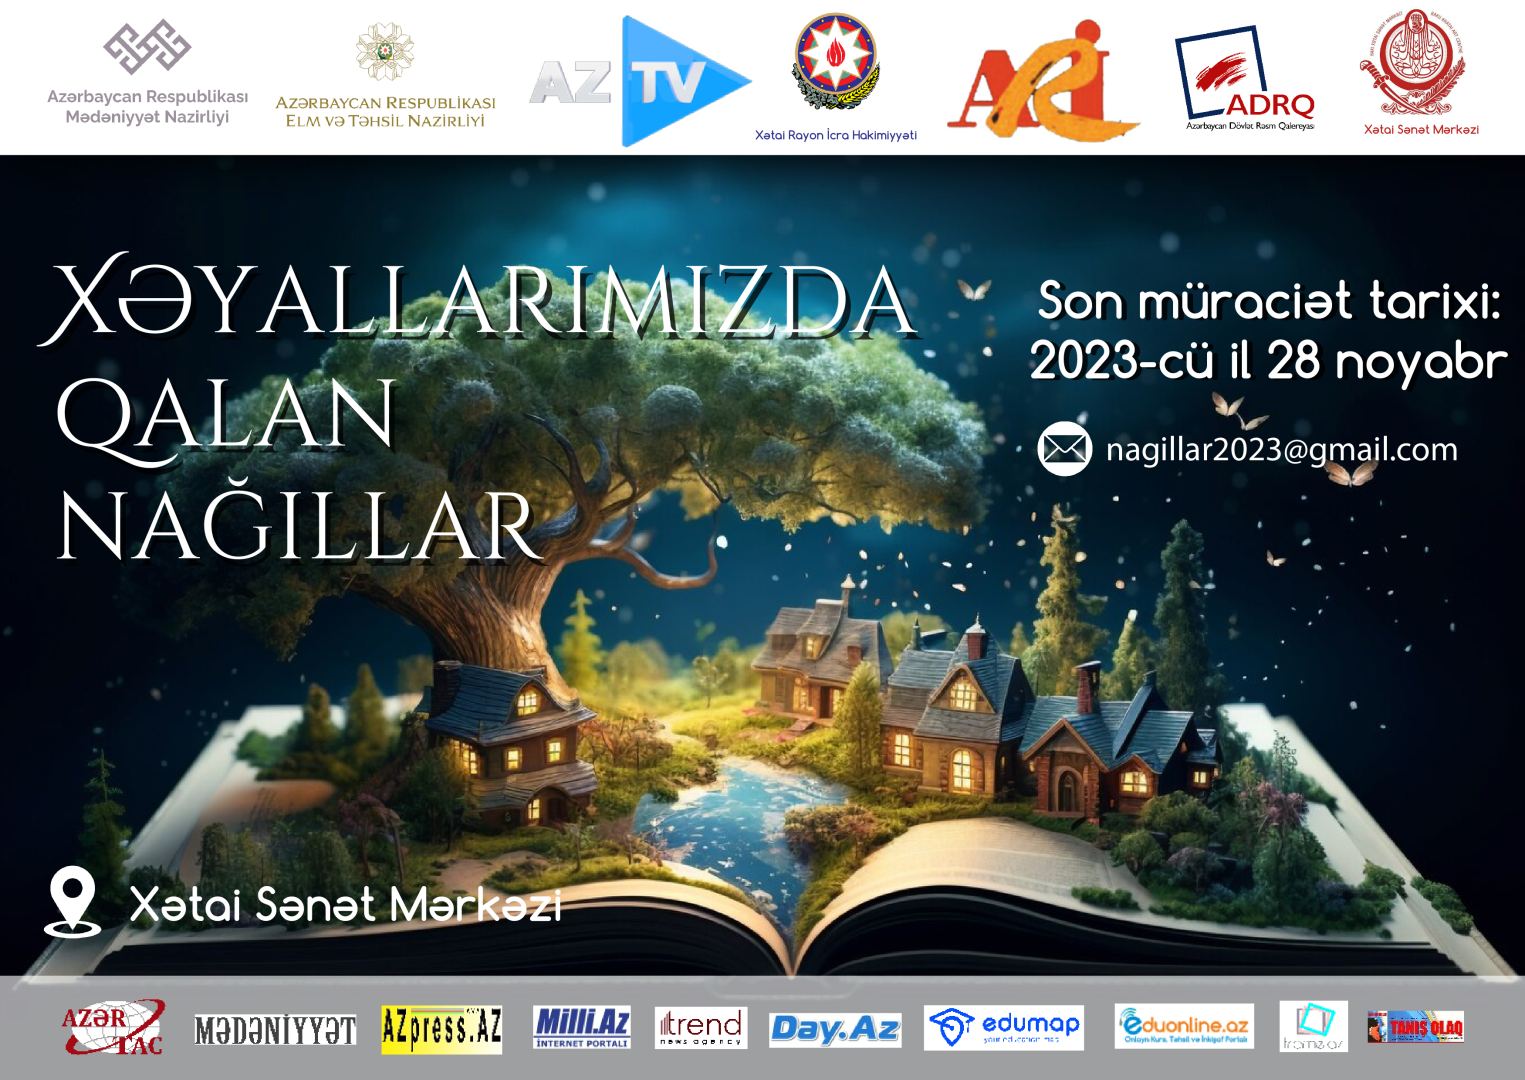 Сказки, оставшиеся в мечтах – в Азербайджане объявлен творческий конкурс